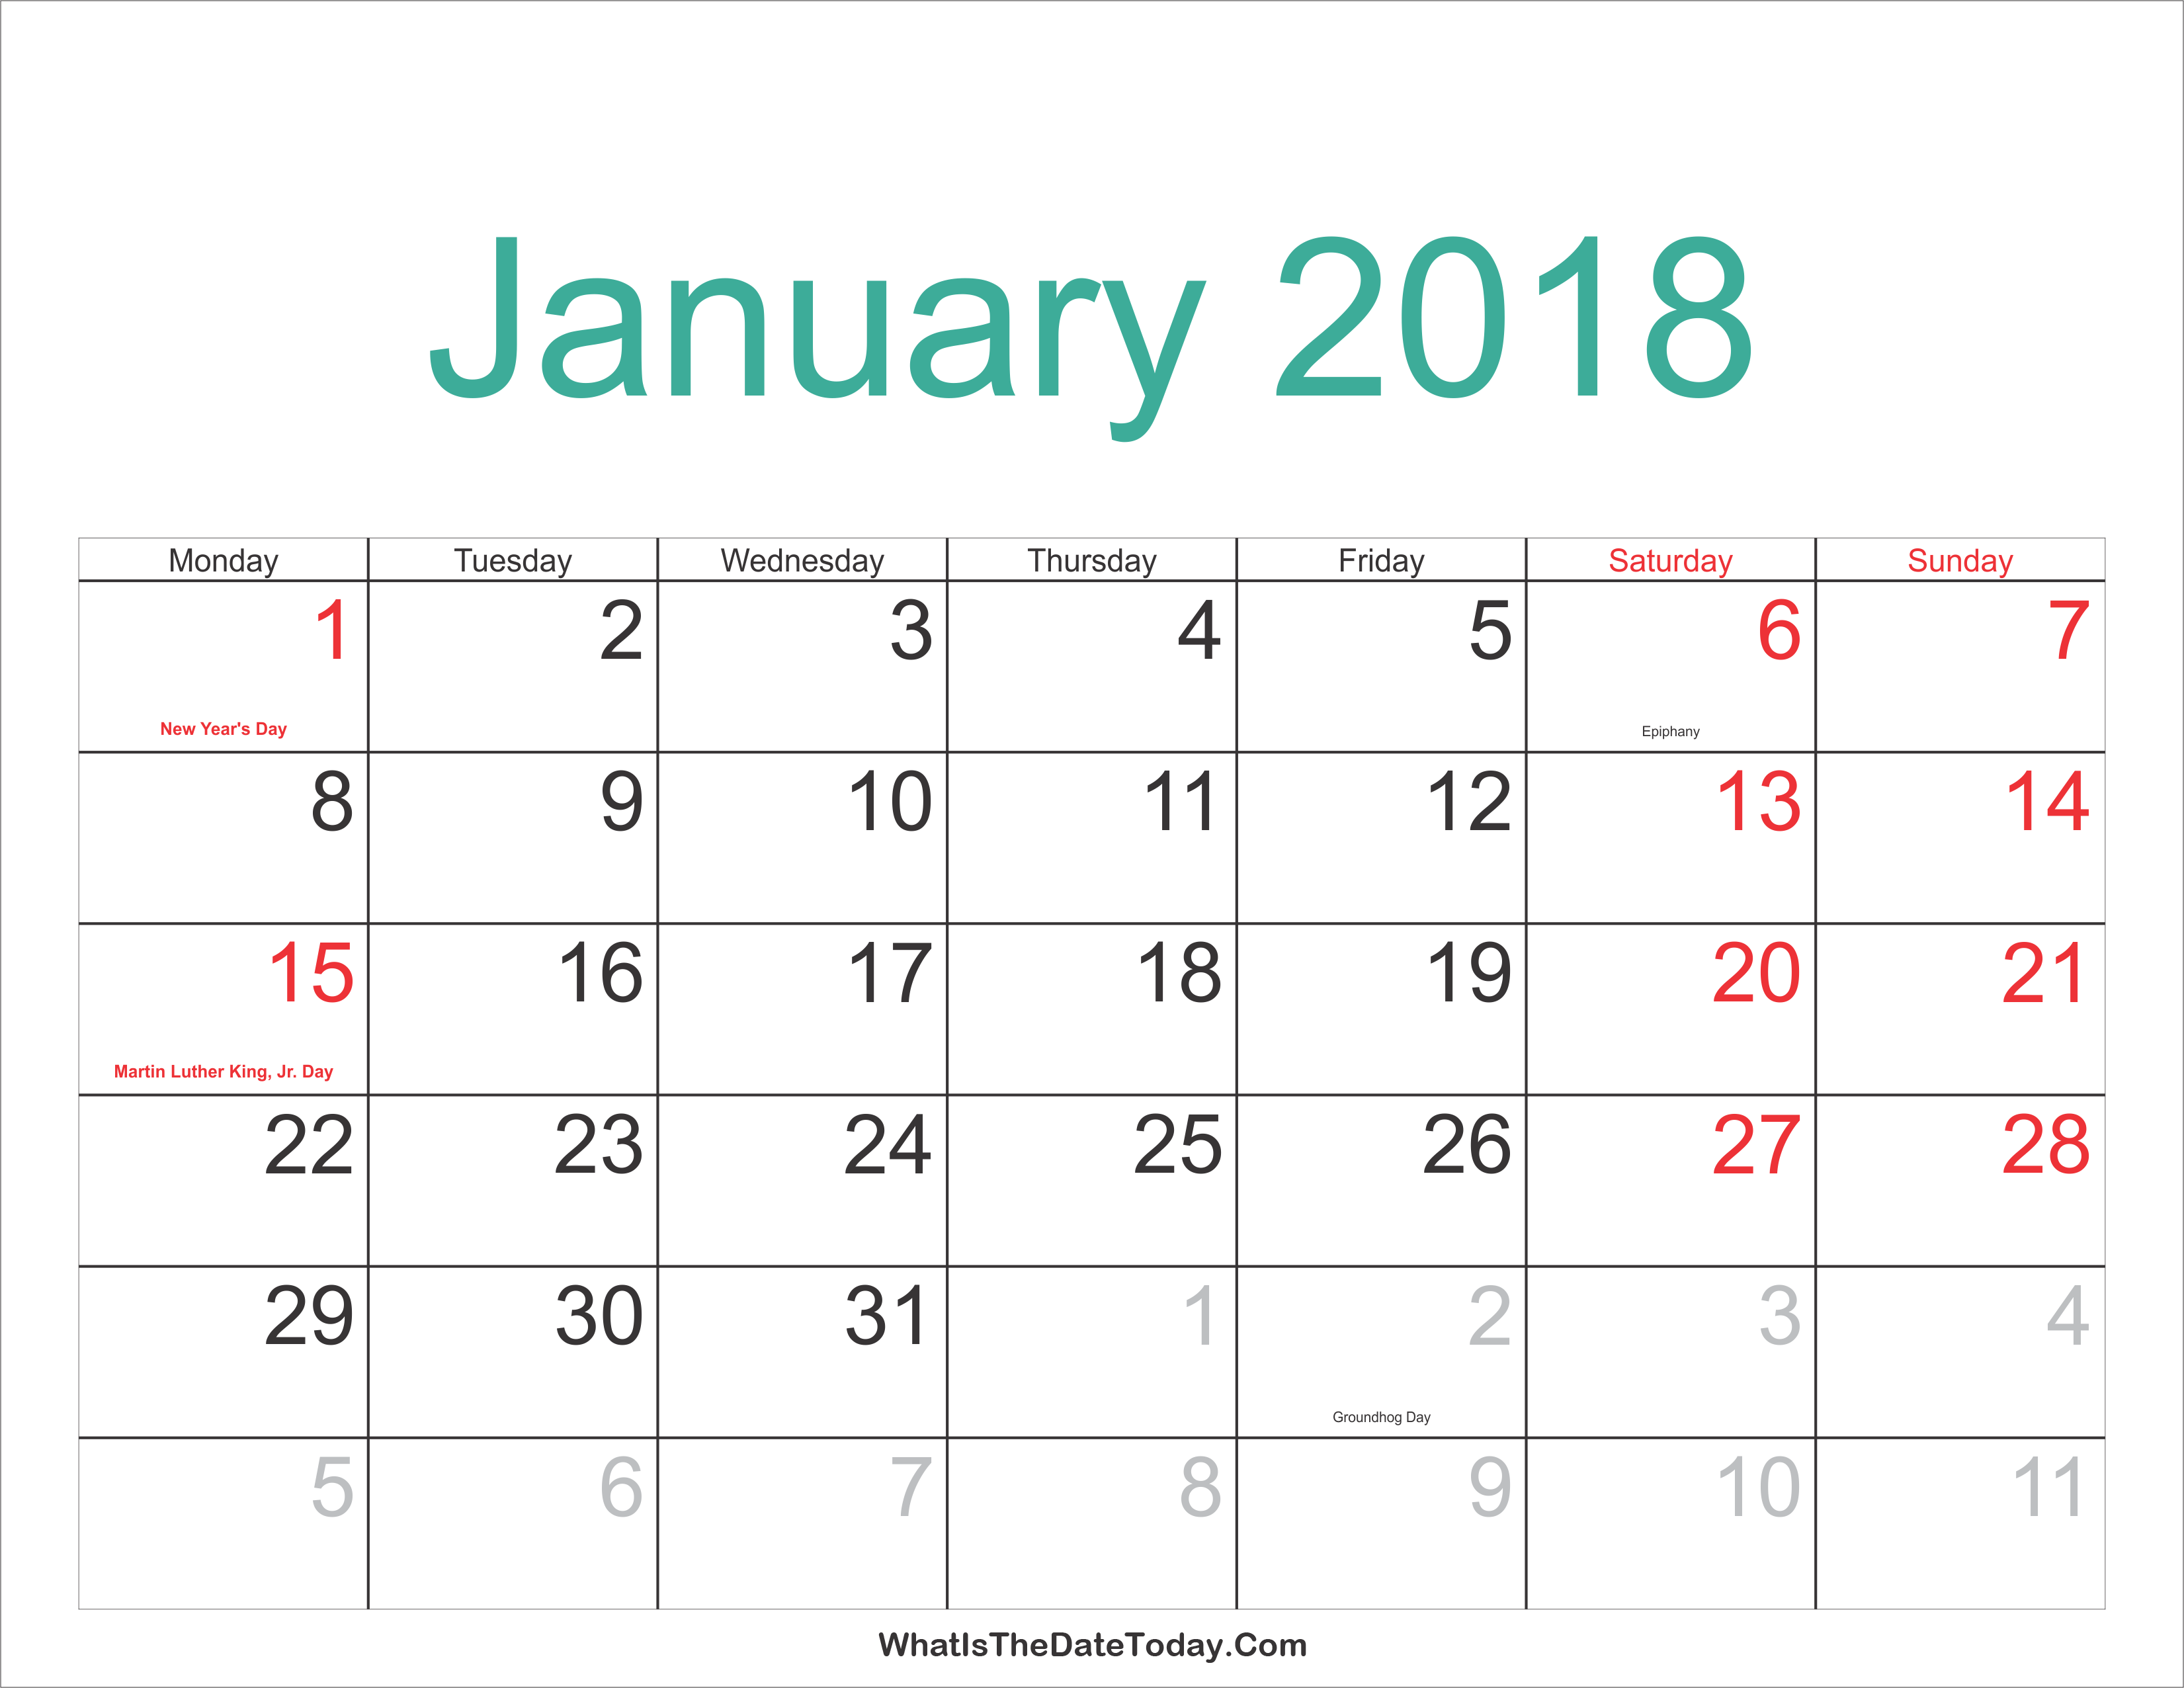 January 2018 Calendar Printable with Holidays Whatisthedatetoday Com